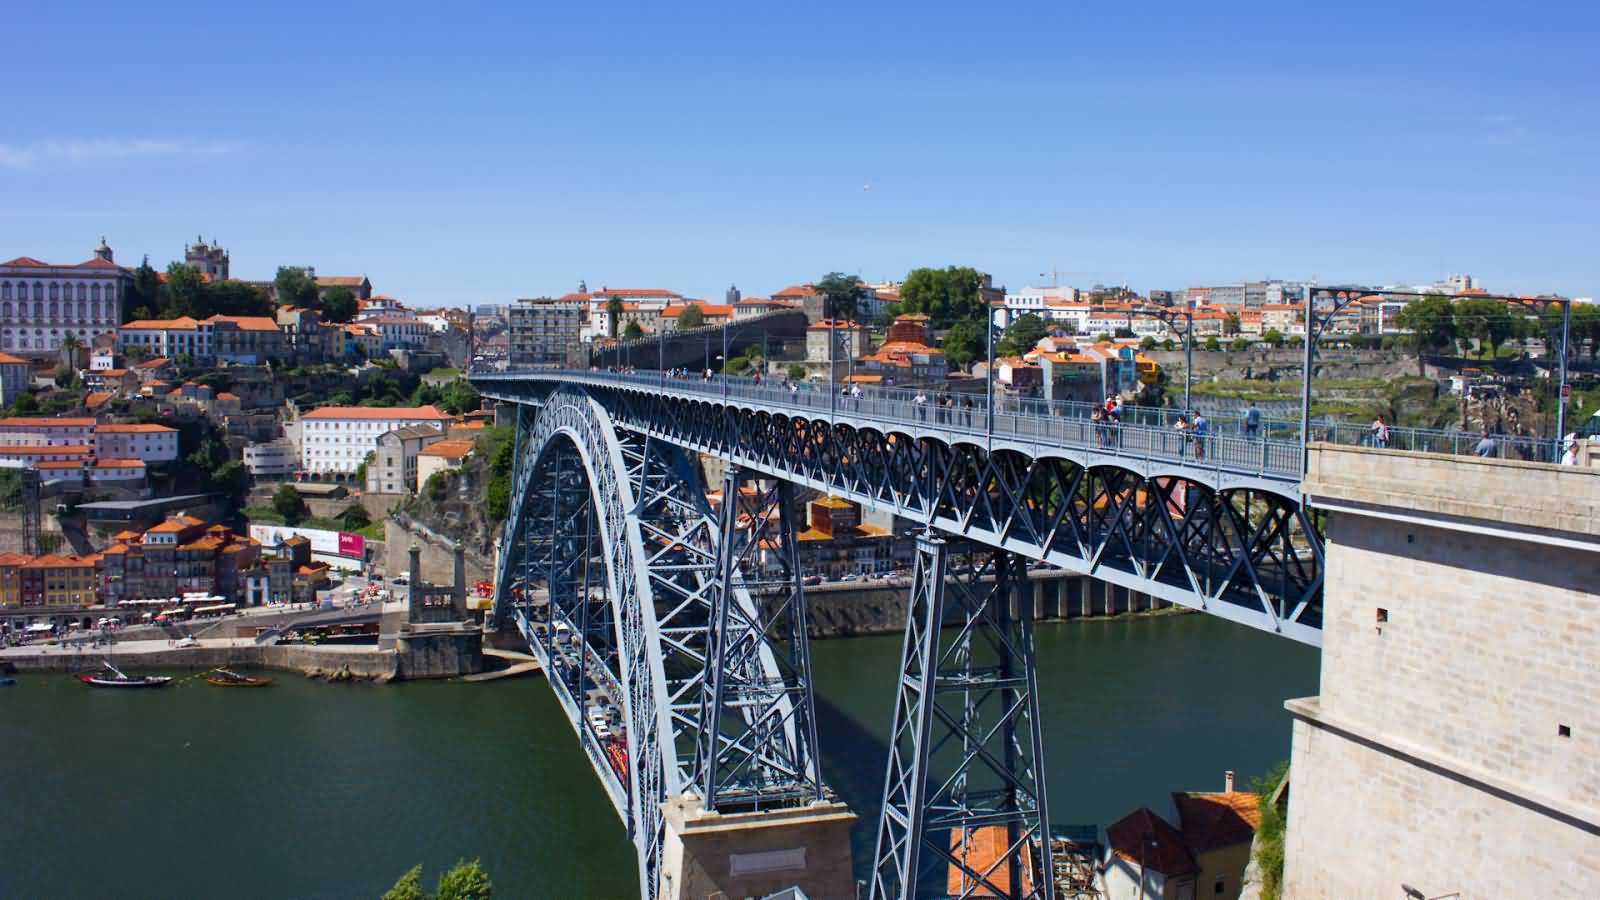 Dom Luis Bridge In Porto